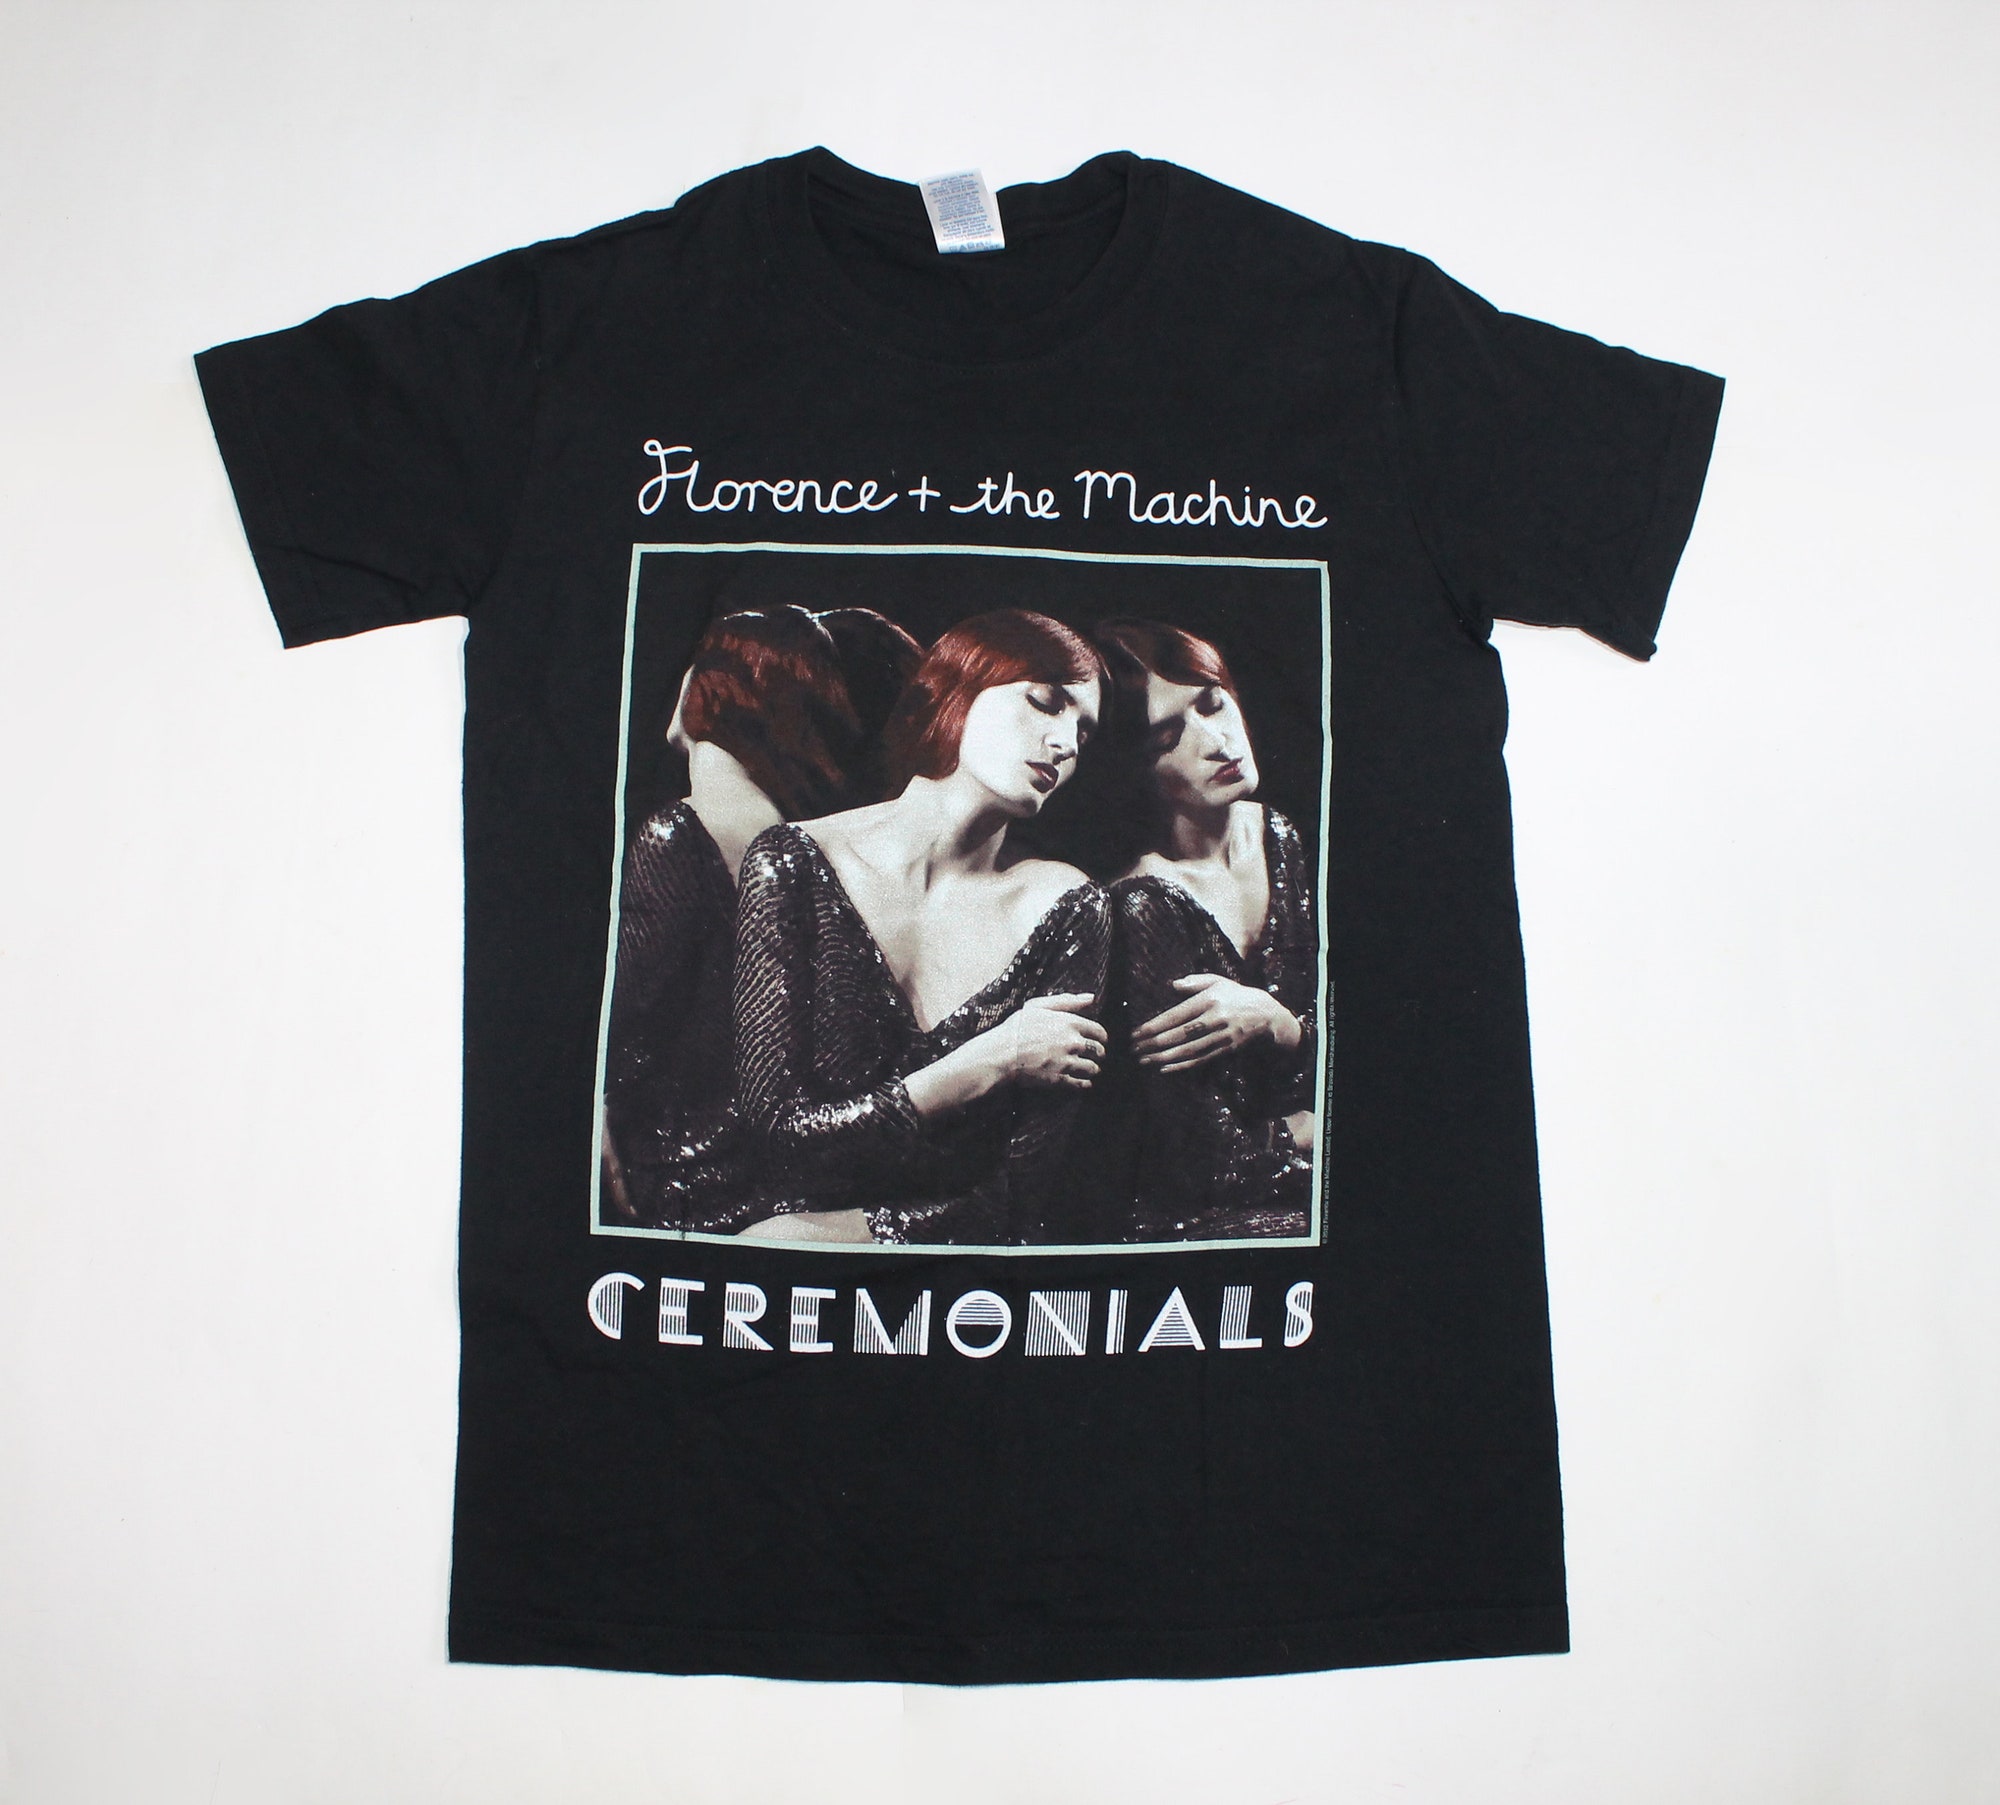 Discover Florence and the Machine shirt Ceremonials Tour Shirt, England indie Rock Band Shirt